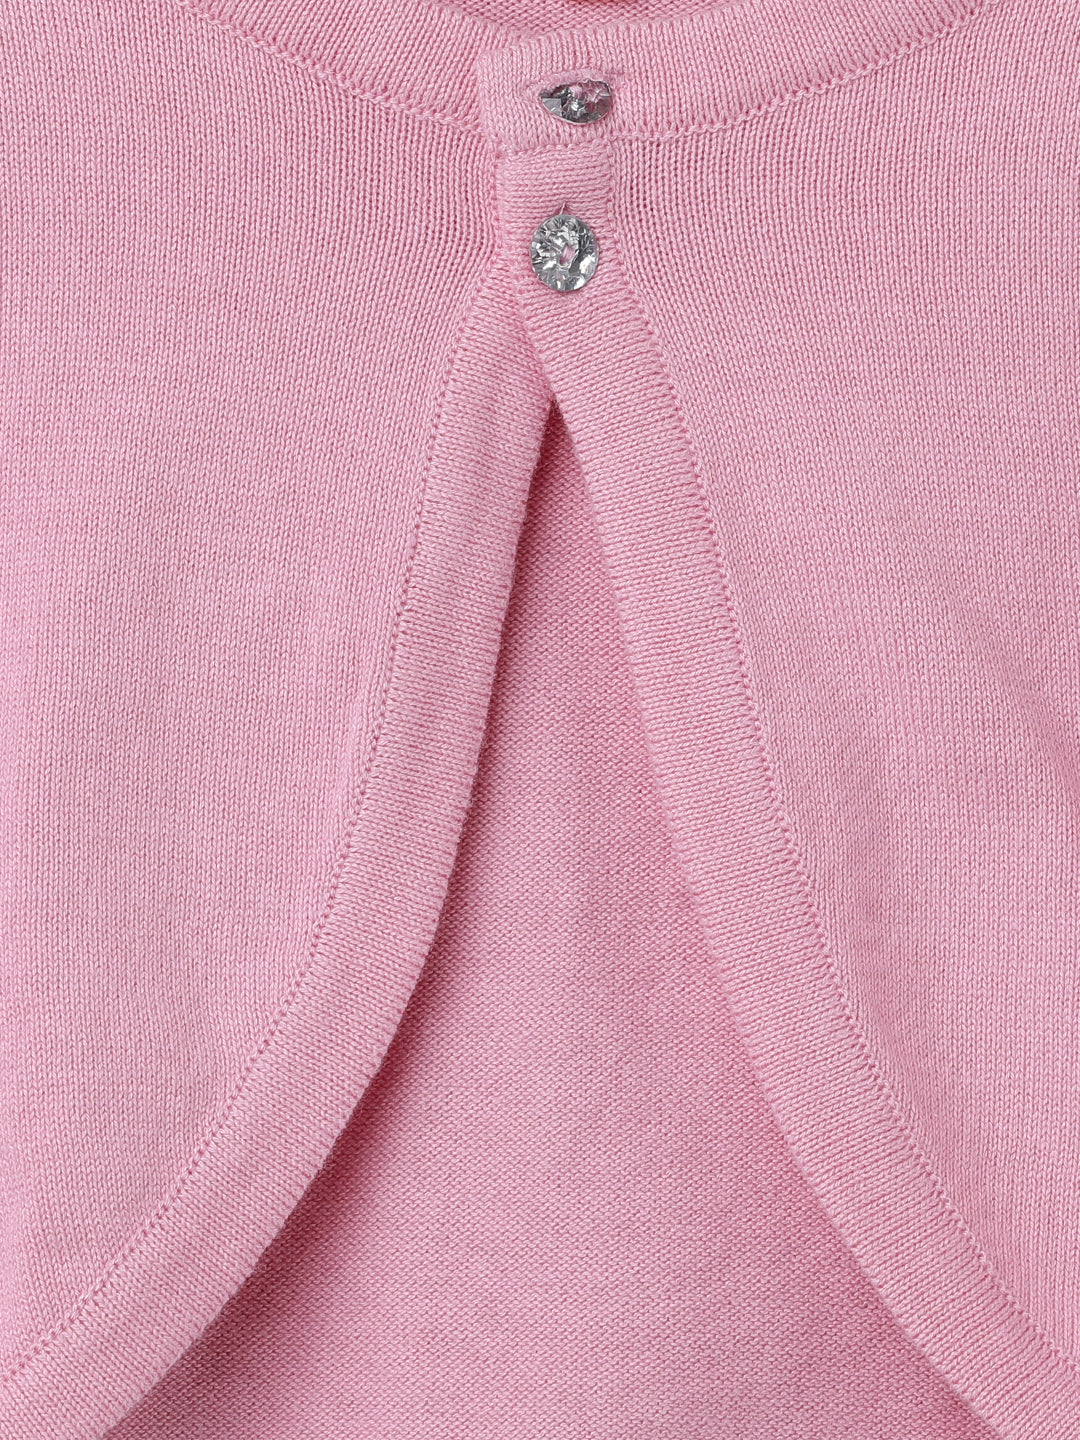 Girls Pink Full Sleeves Cotton Shrug